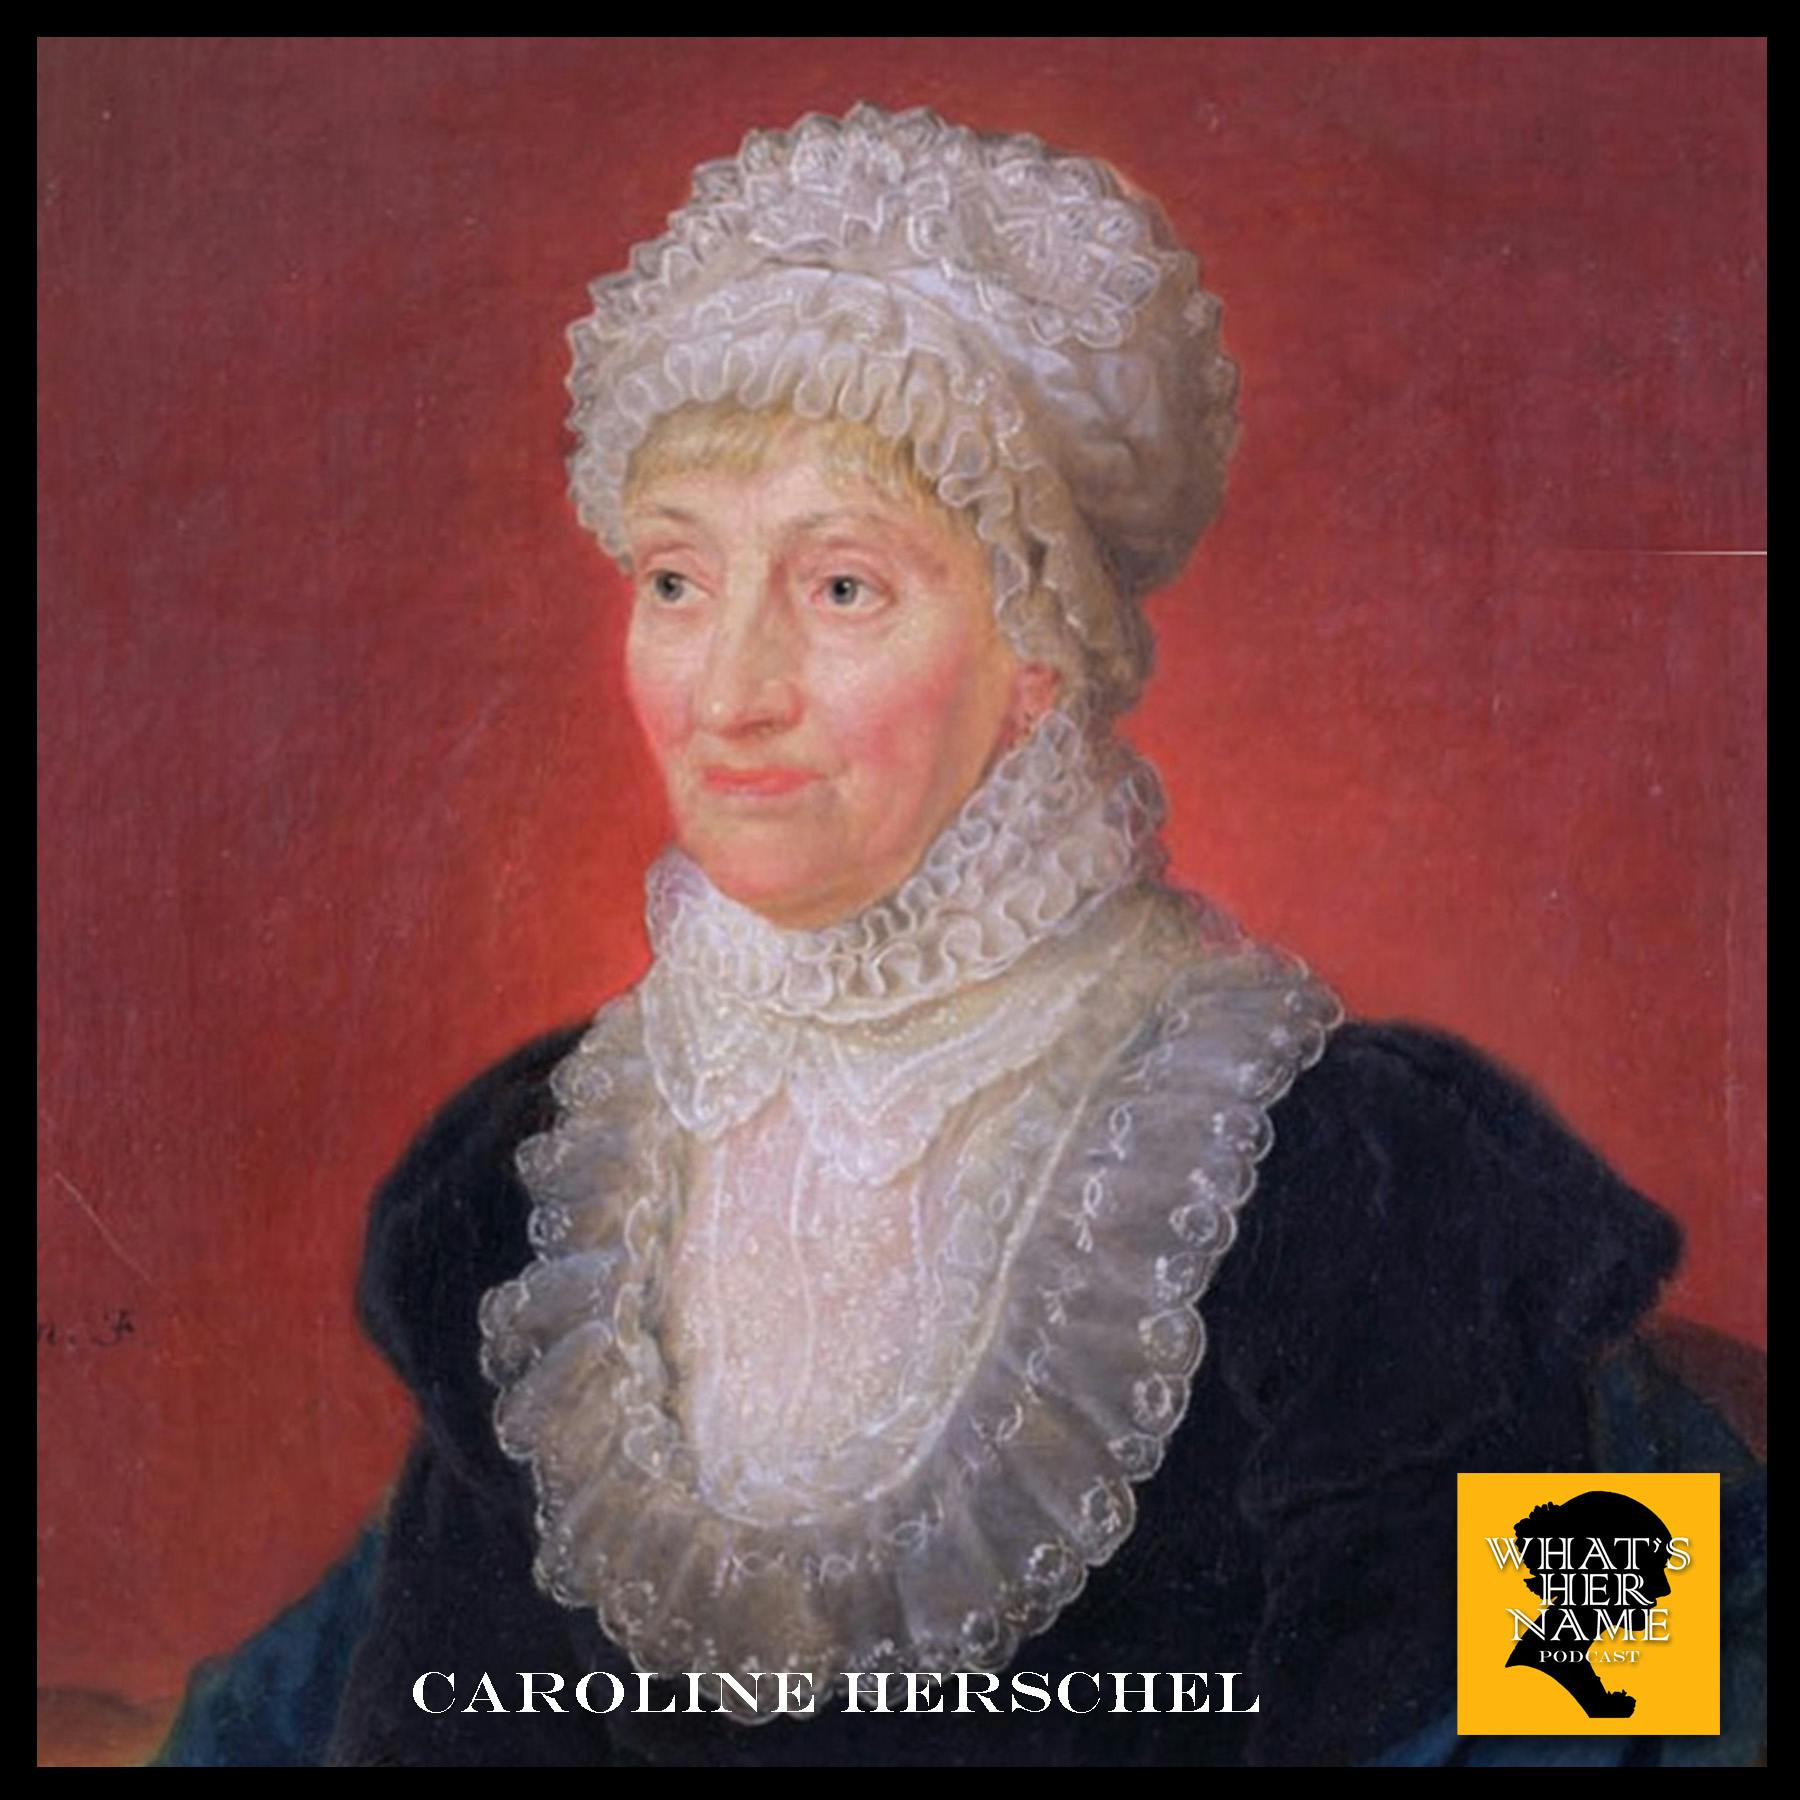 THE ASTRONOMER Caroline Herschel